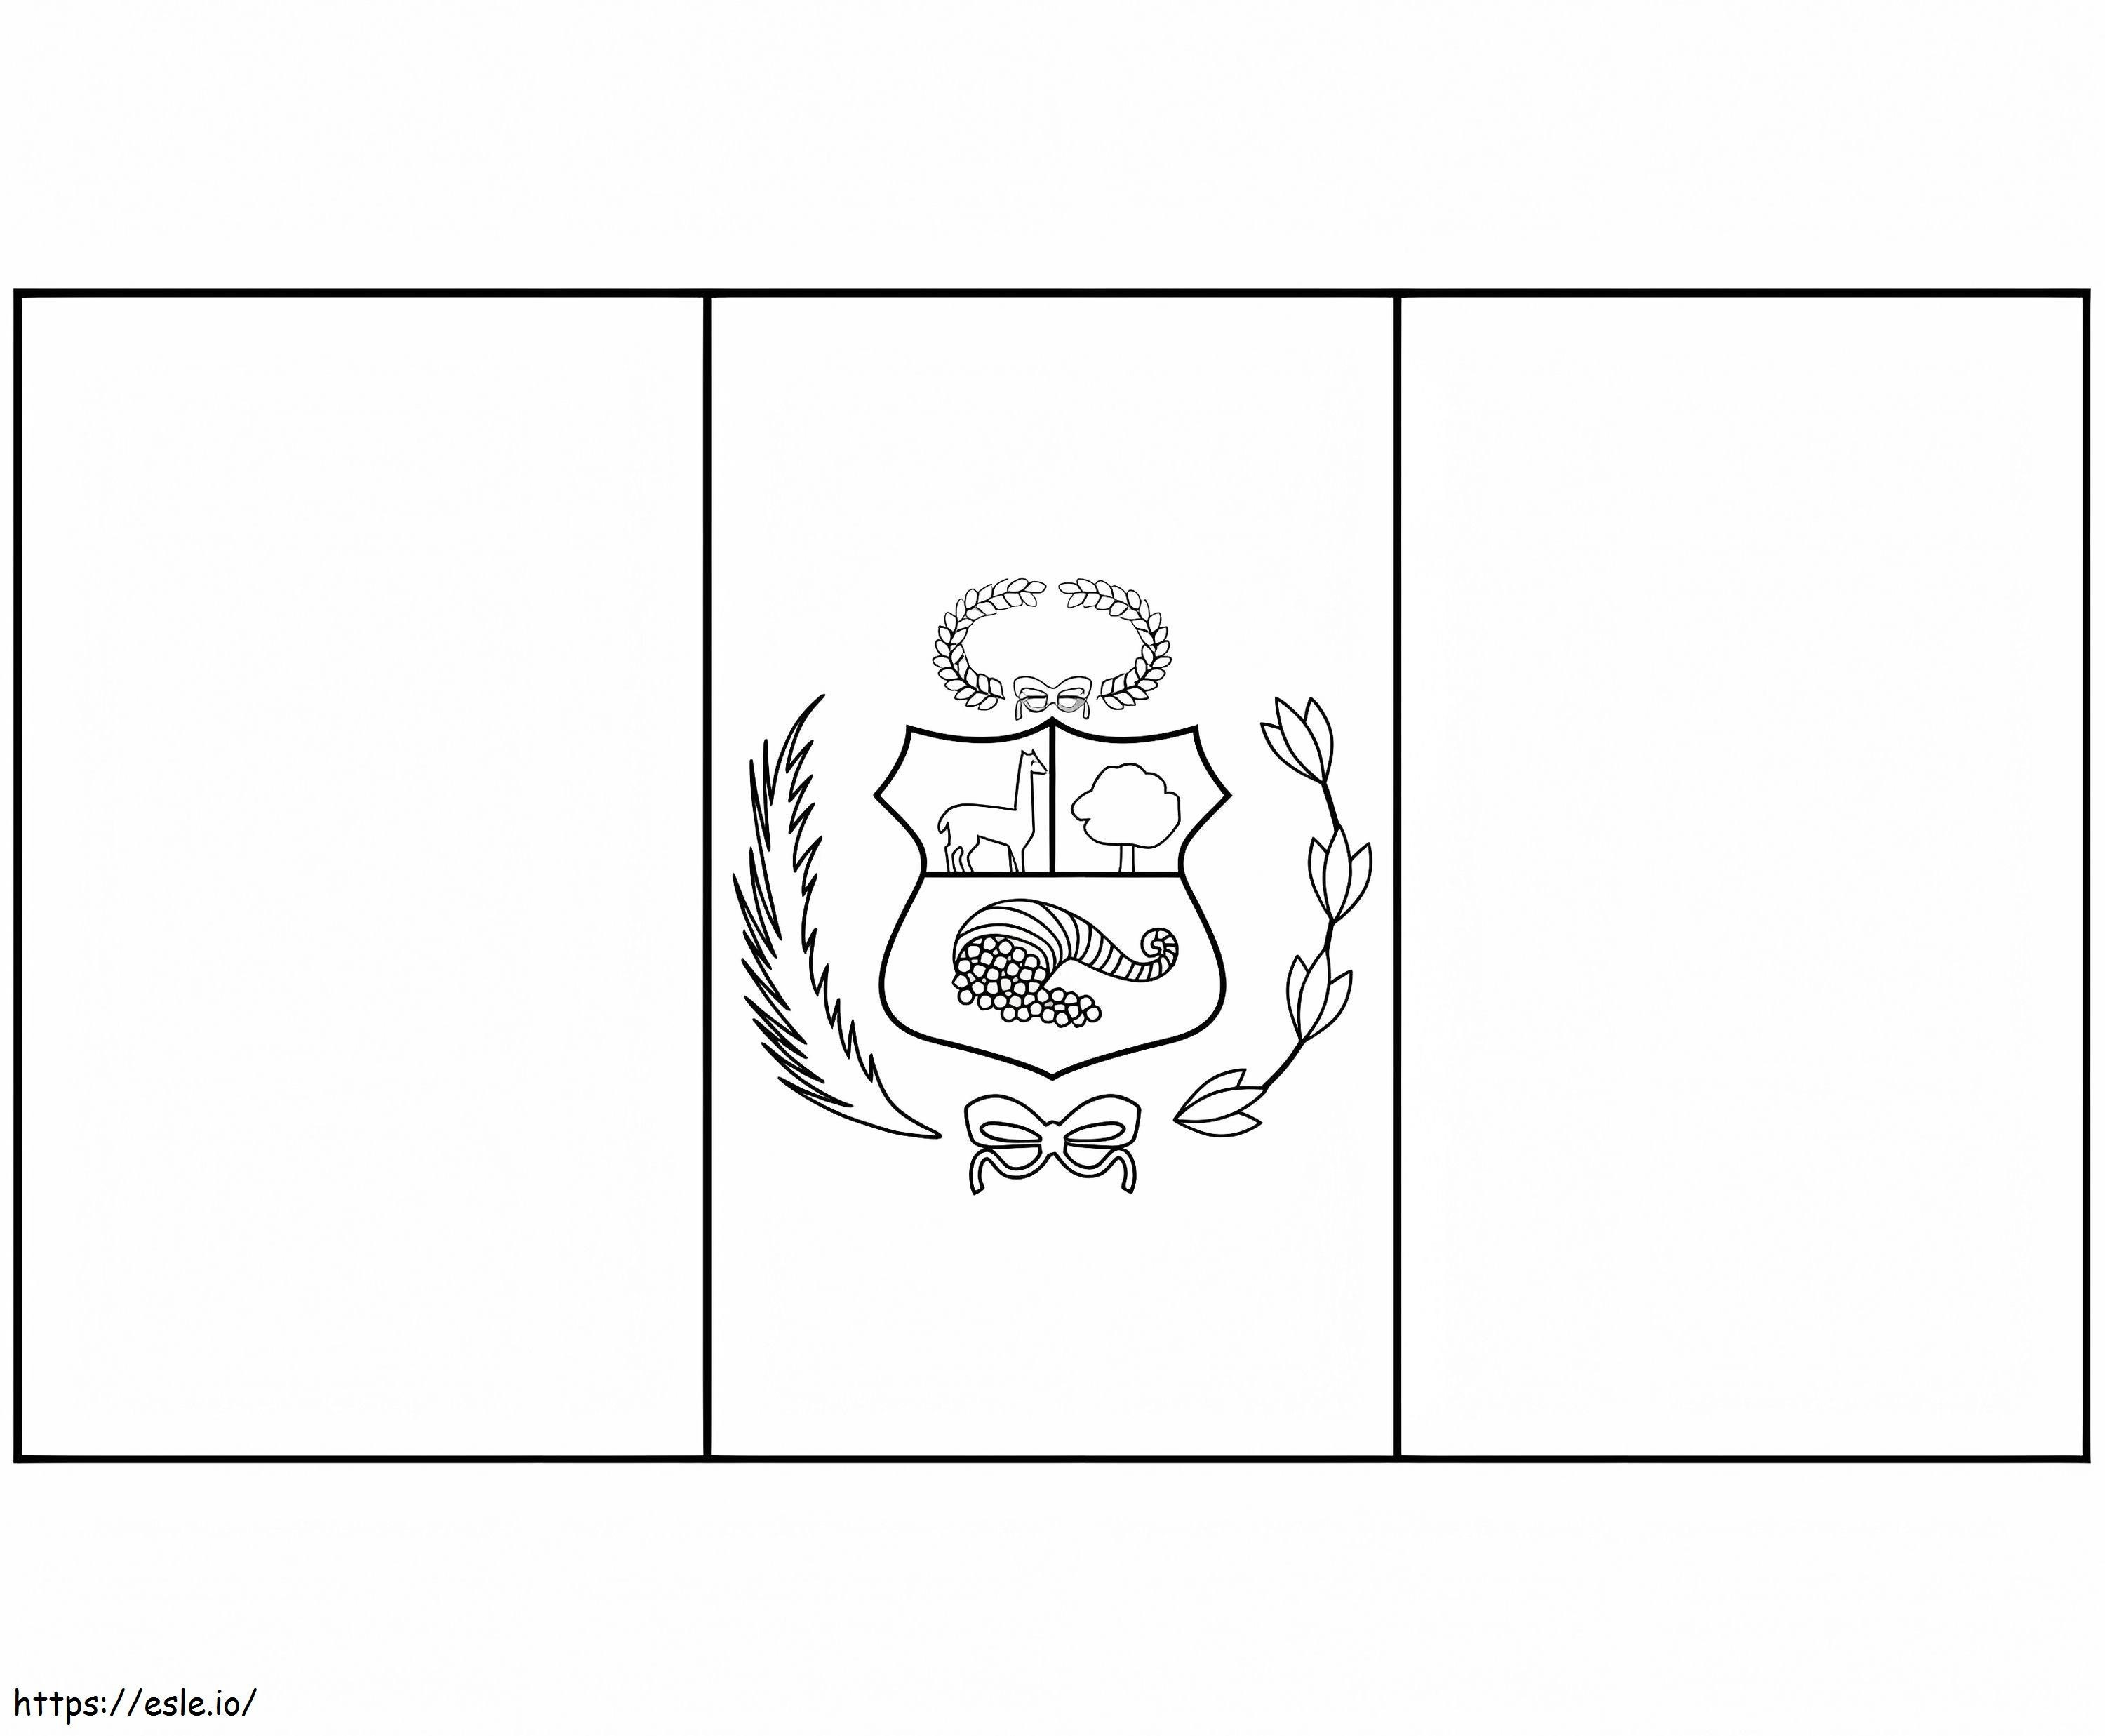 Peru Flag coloring page